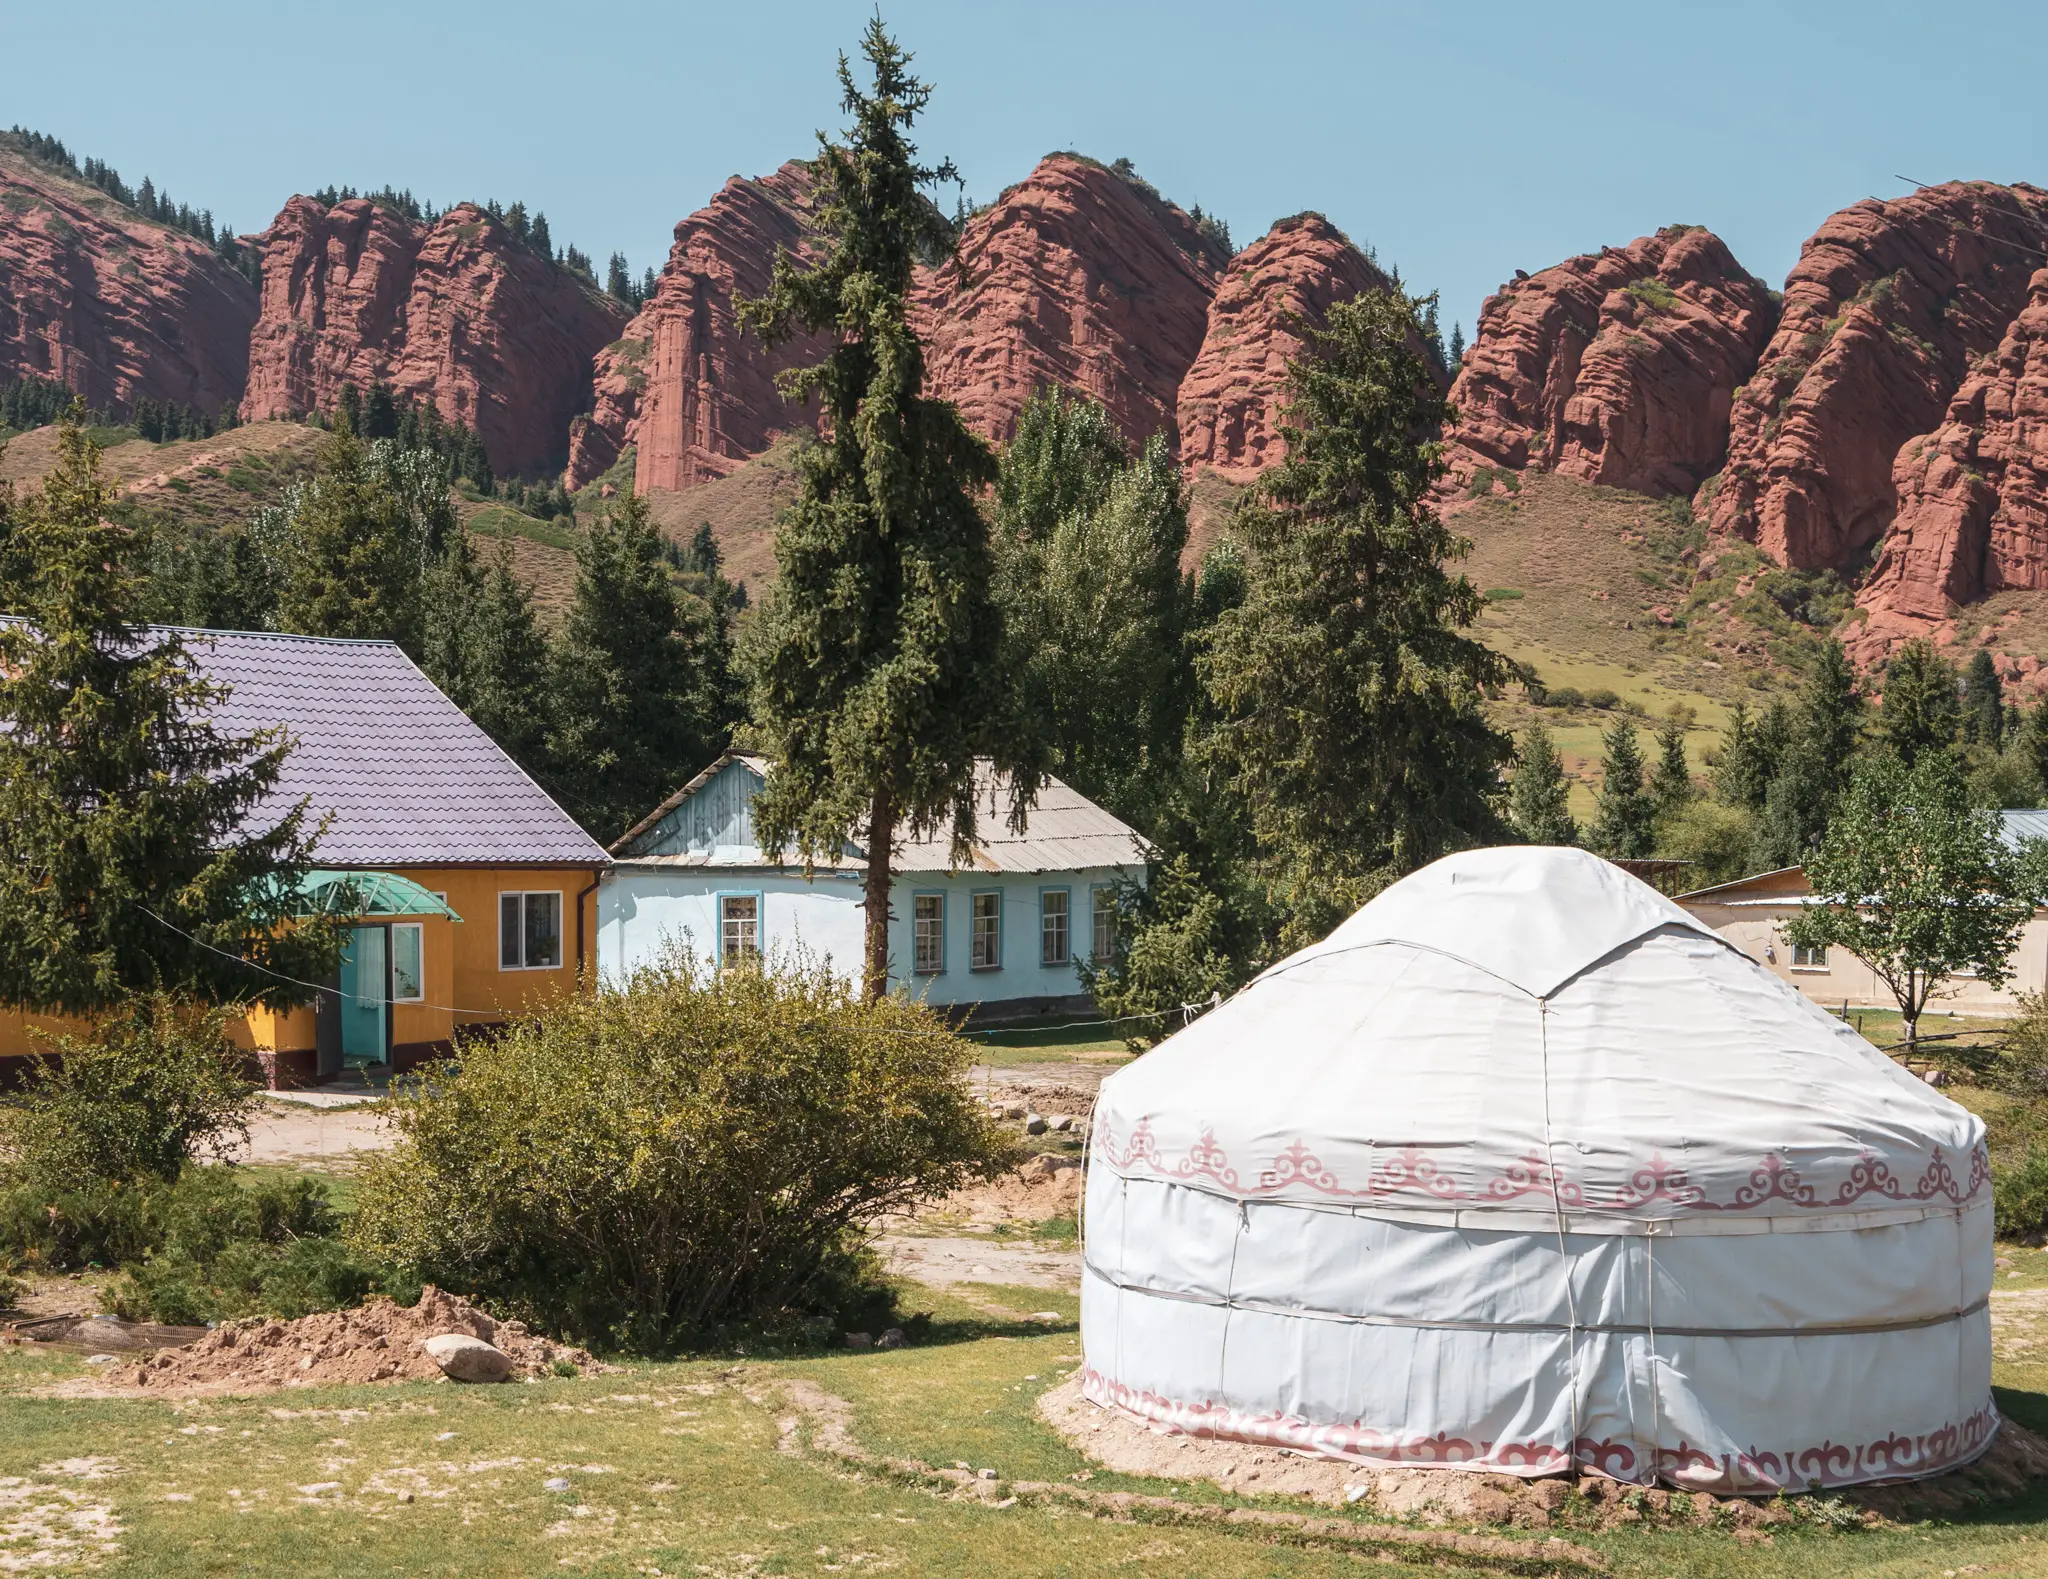 A traditional Kyrgyz yurt